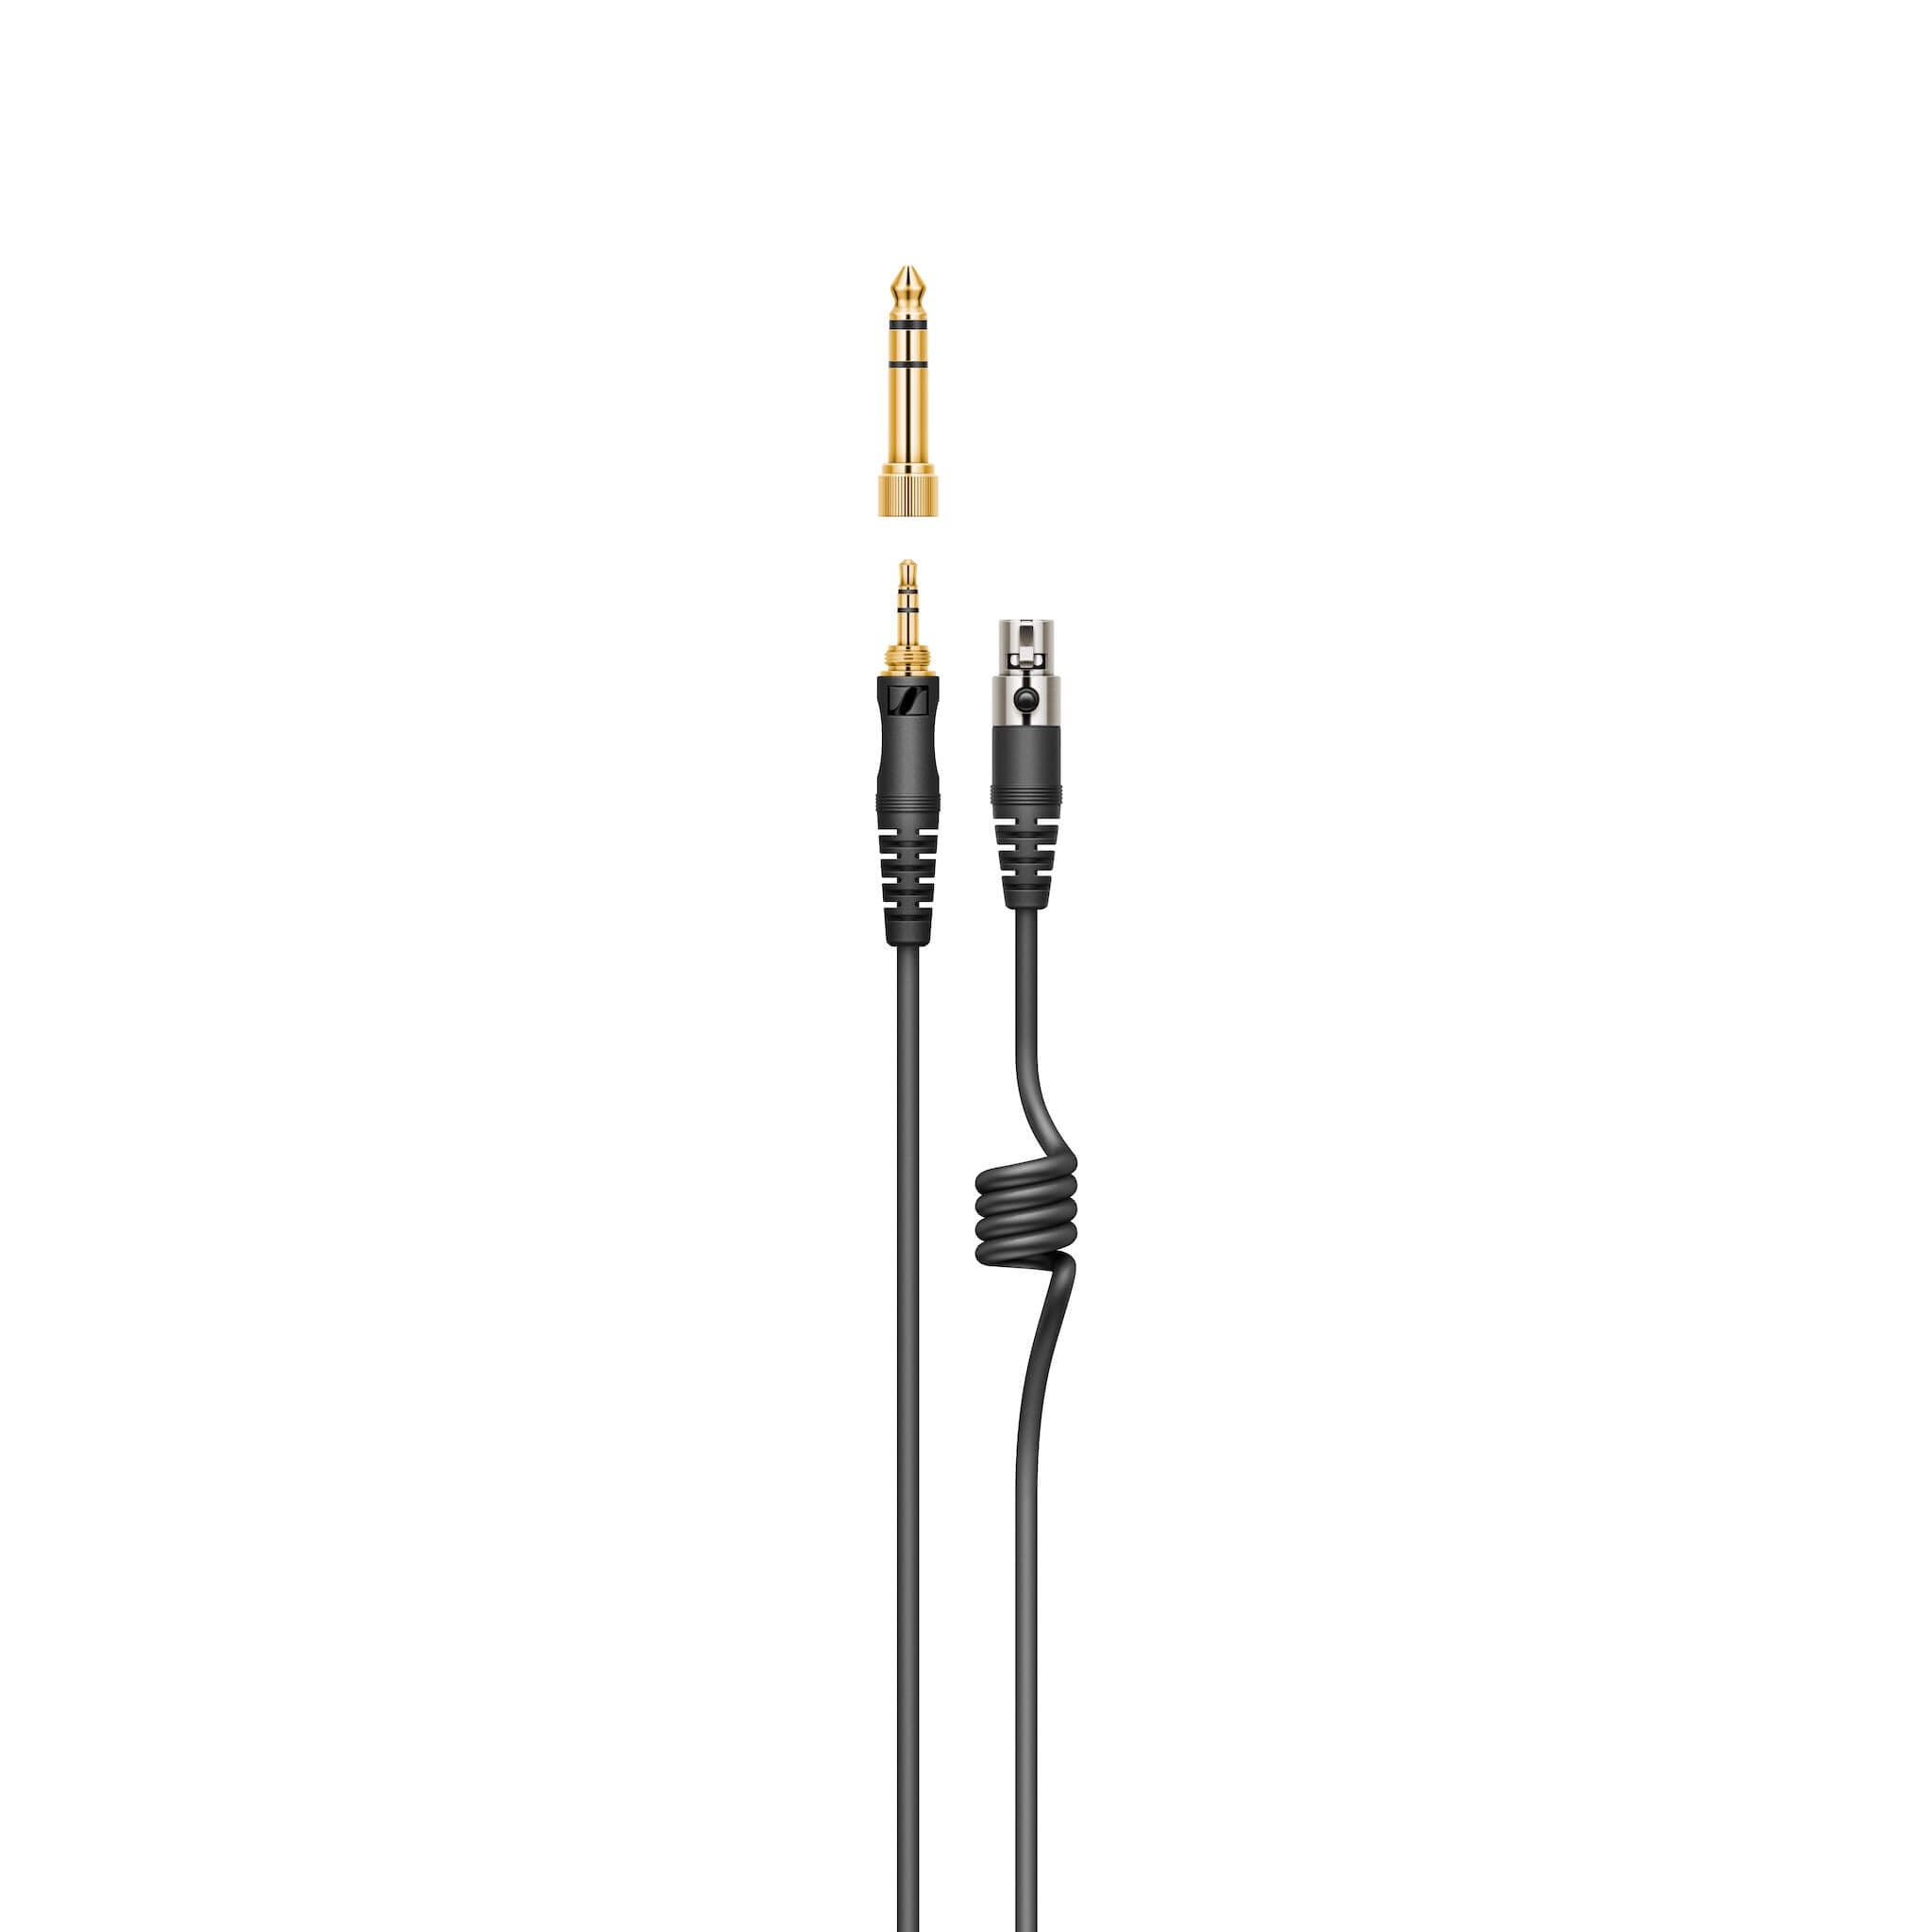 Sennheiser HD 490 PRO - Professional Studio Reference Headphones, cable